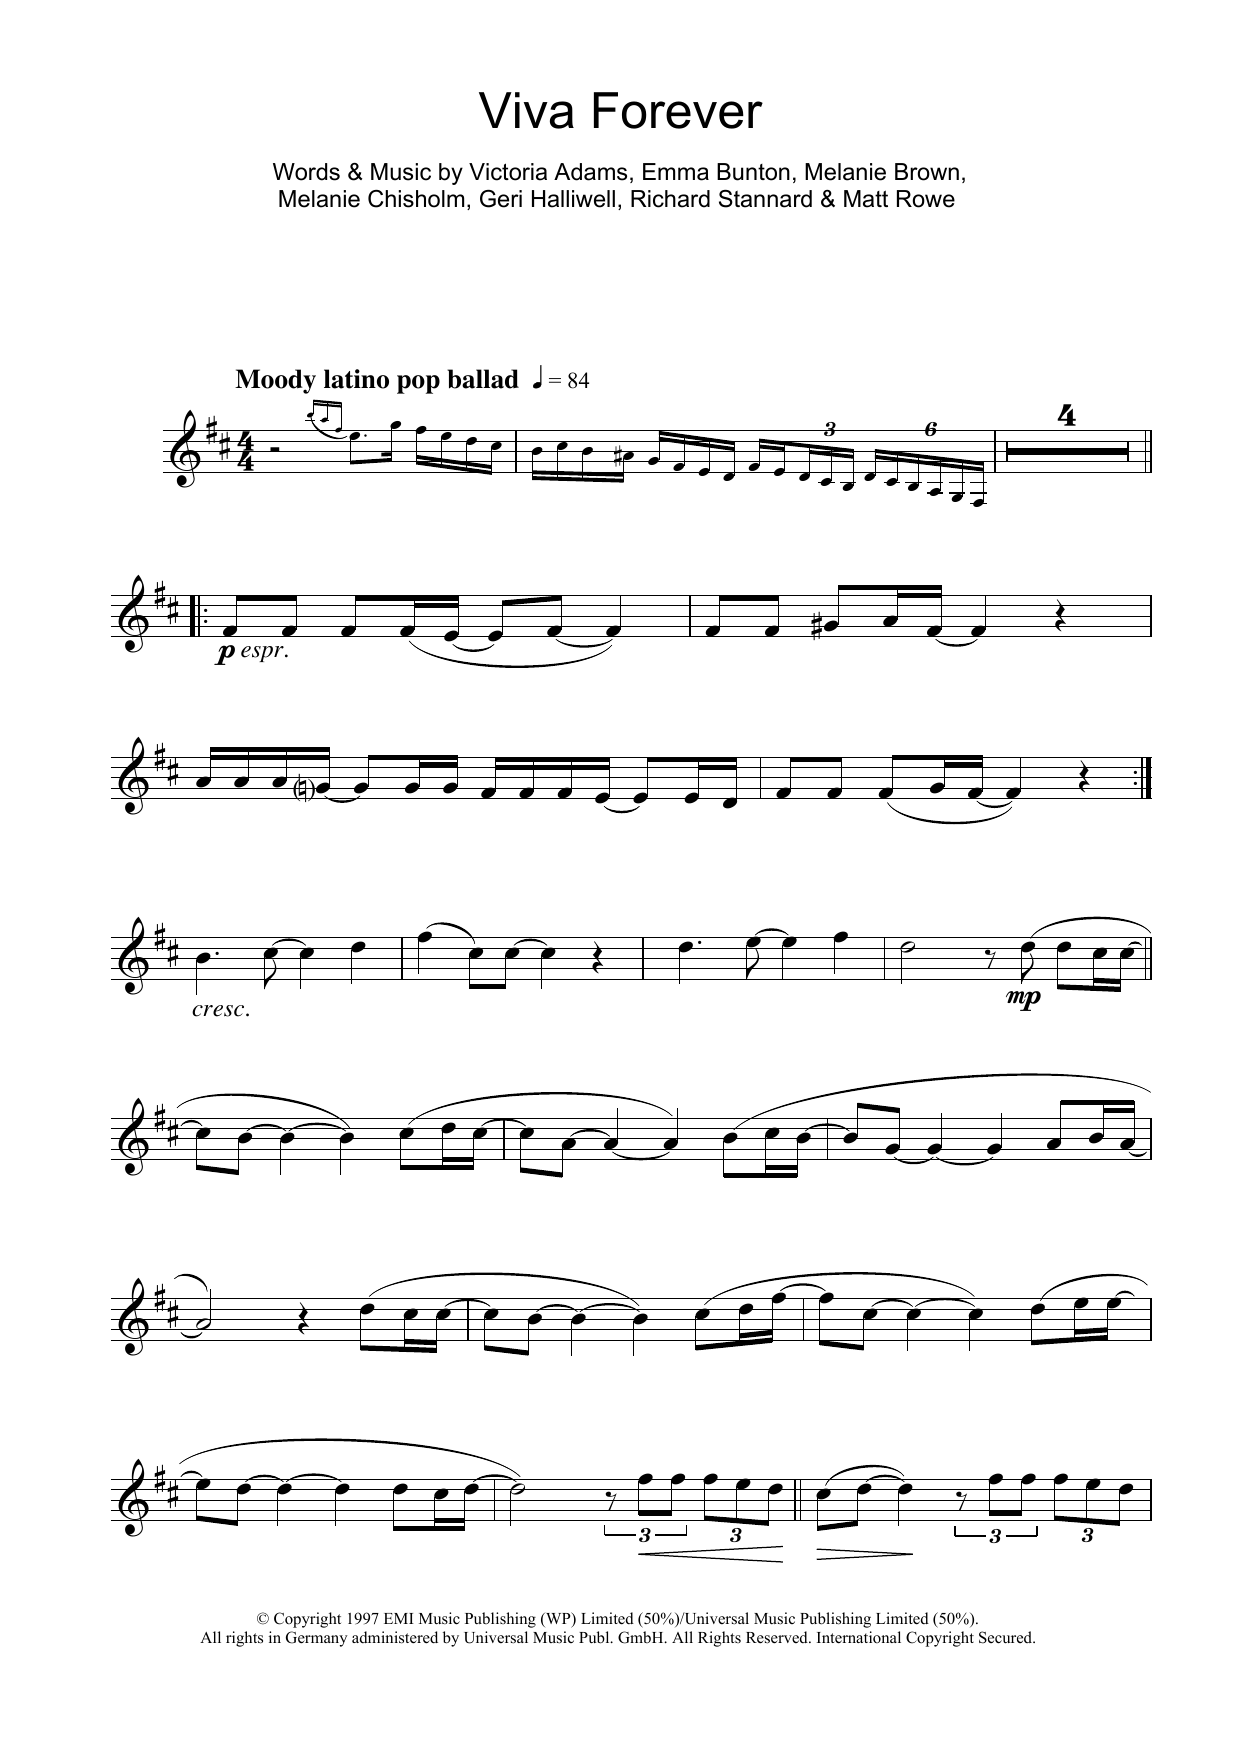 Spice Girls Viva Forever Sheet Music Notes & Chords for Violin - Download or Print PDF